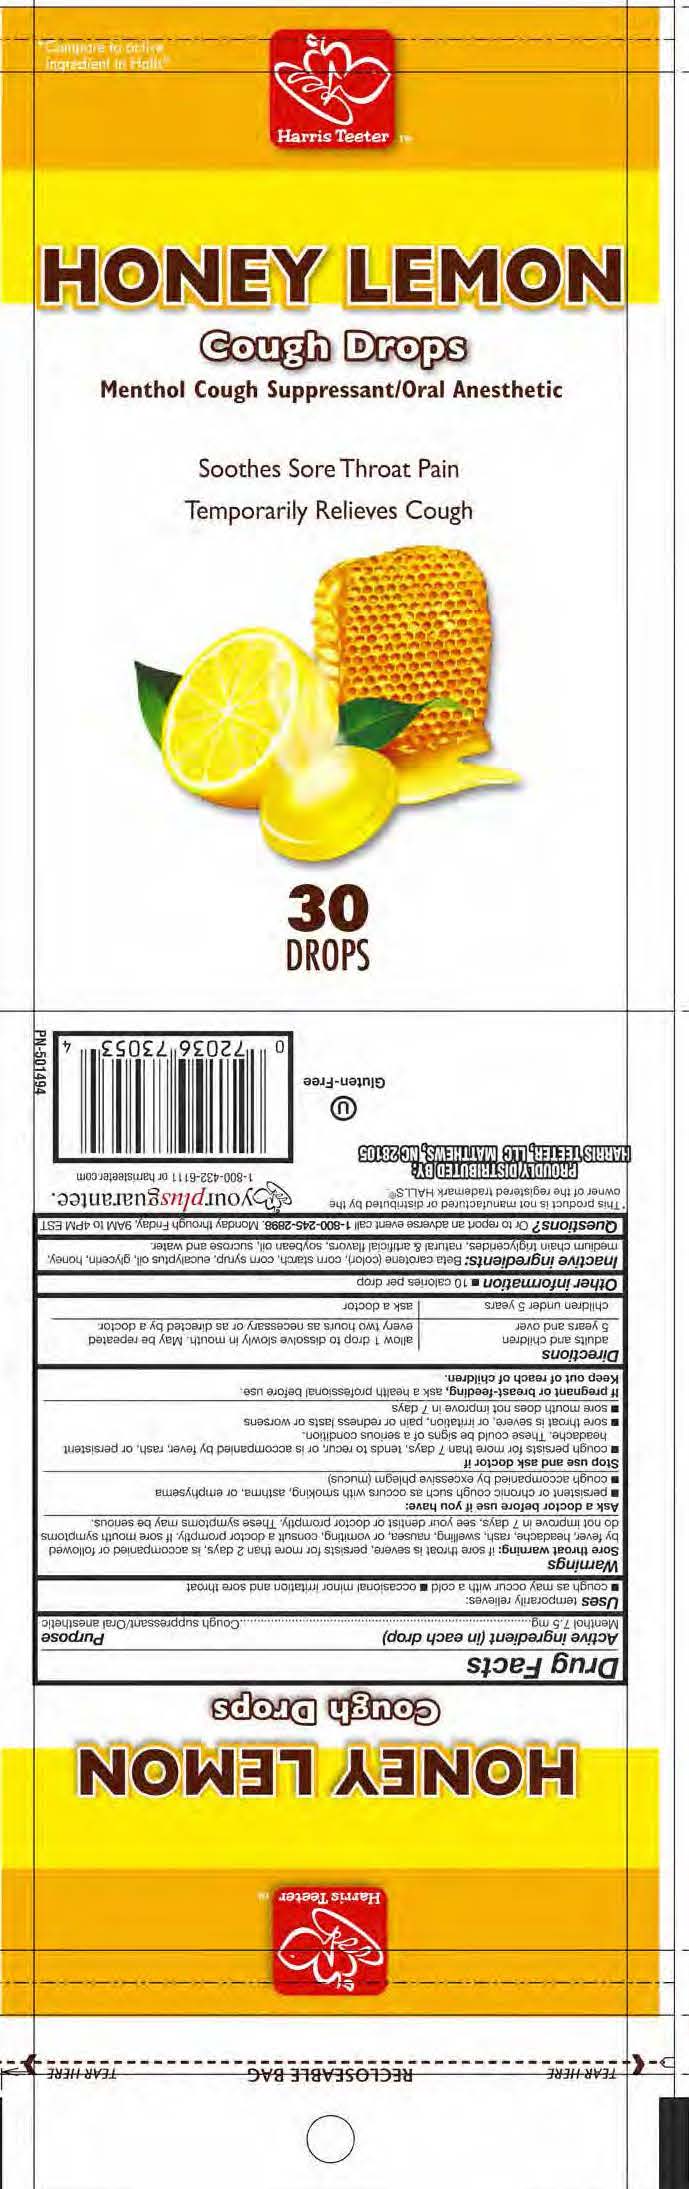 Harris Teeter Honey Lemon 30ct Cough Drops